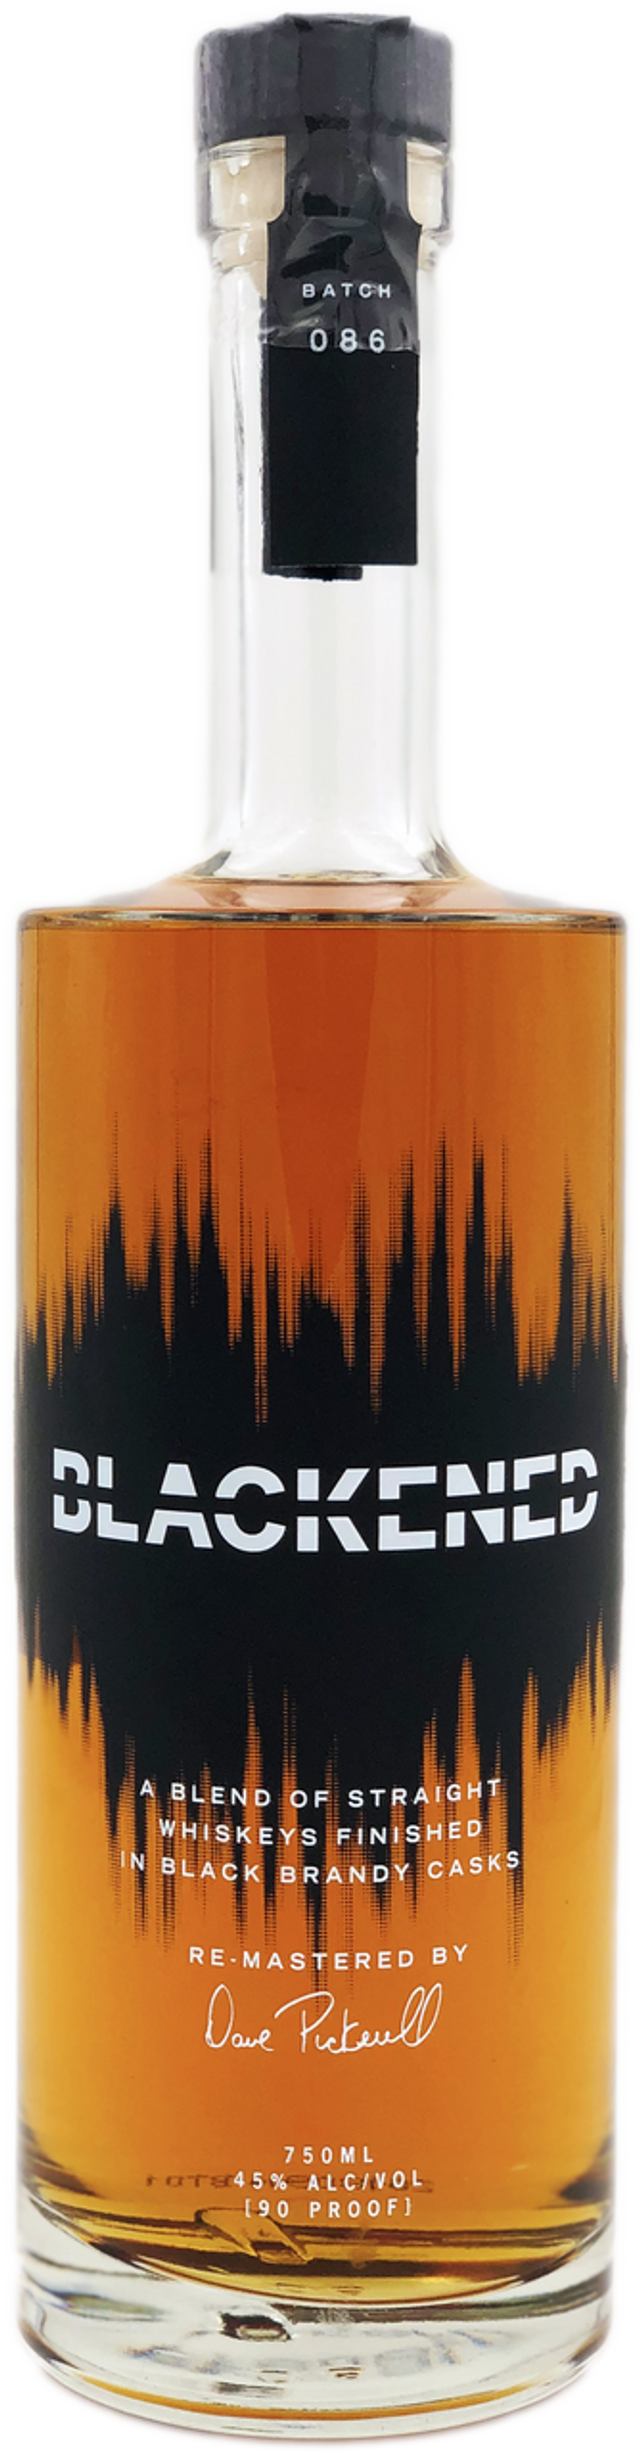 blackened whiskey batch 101